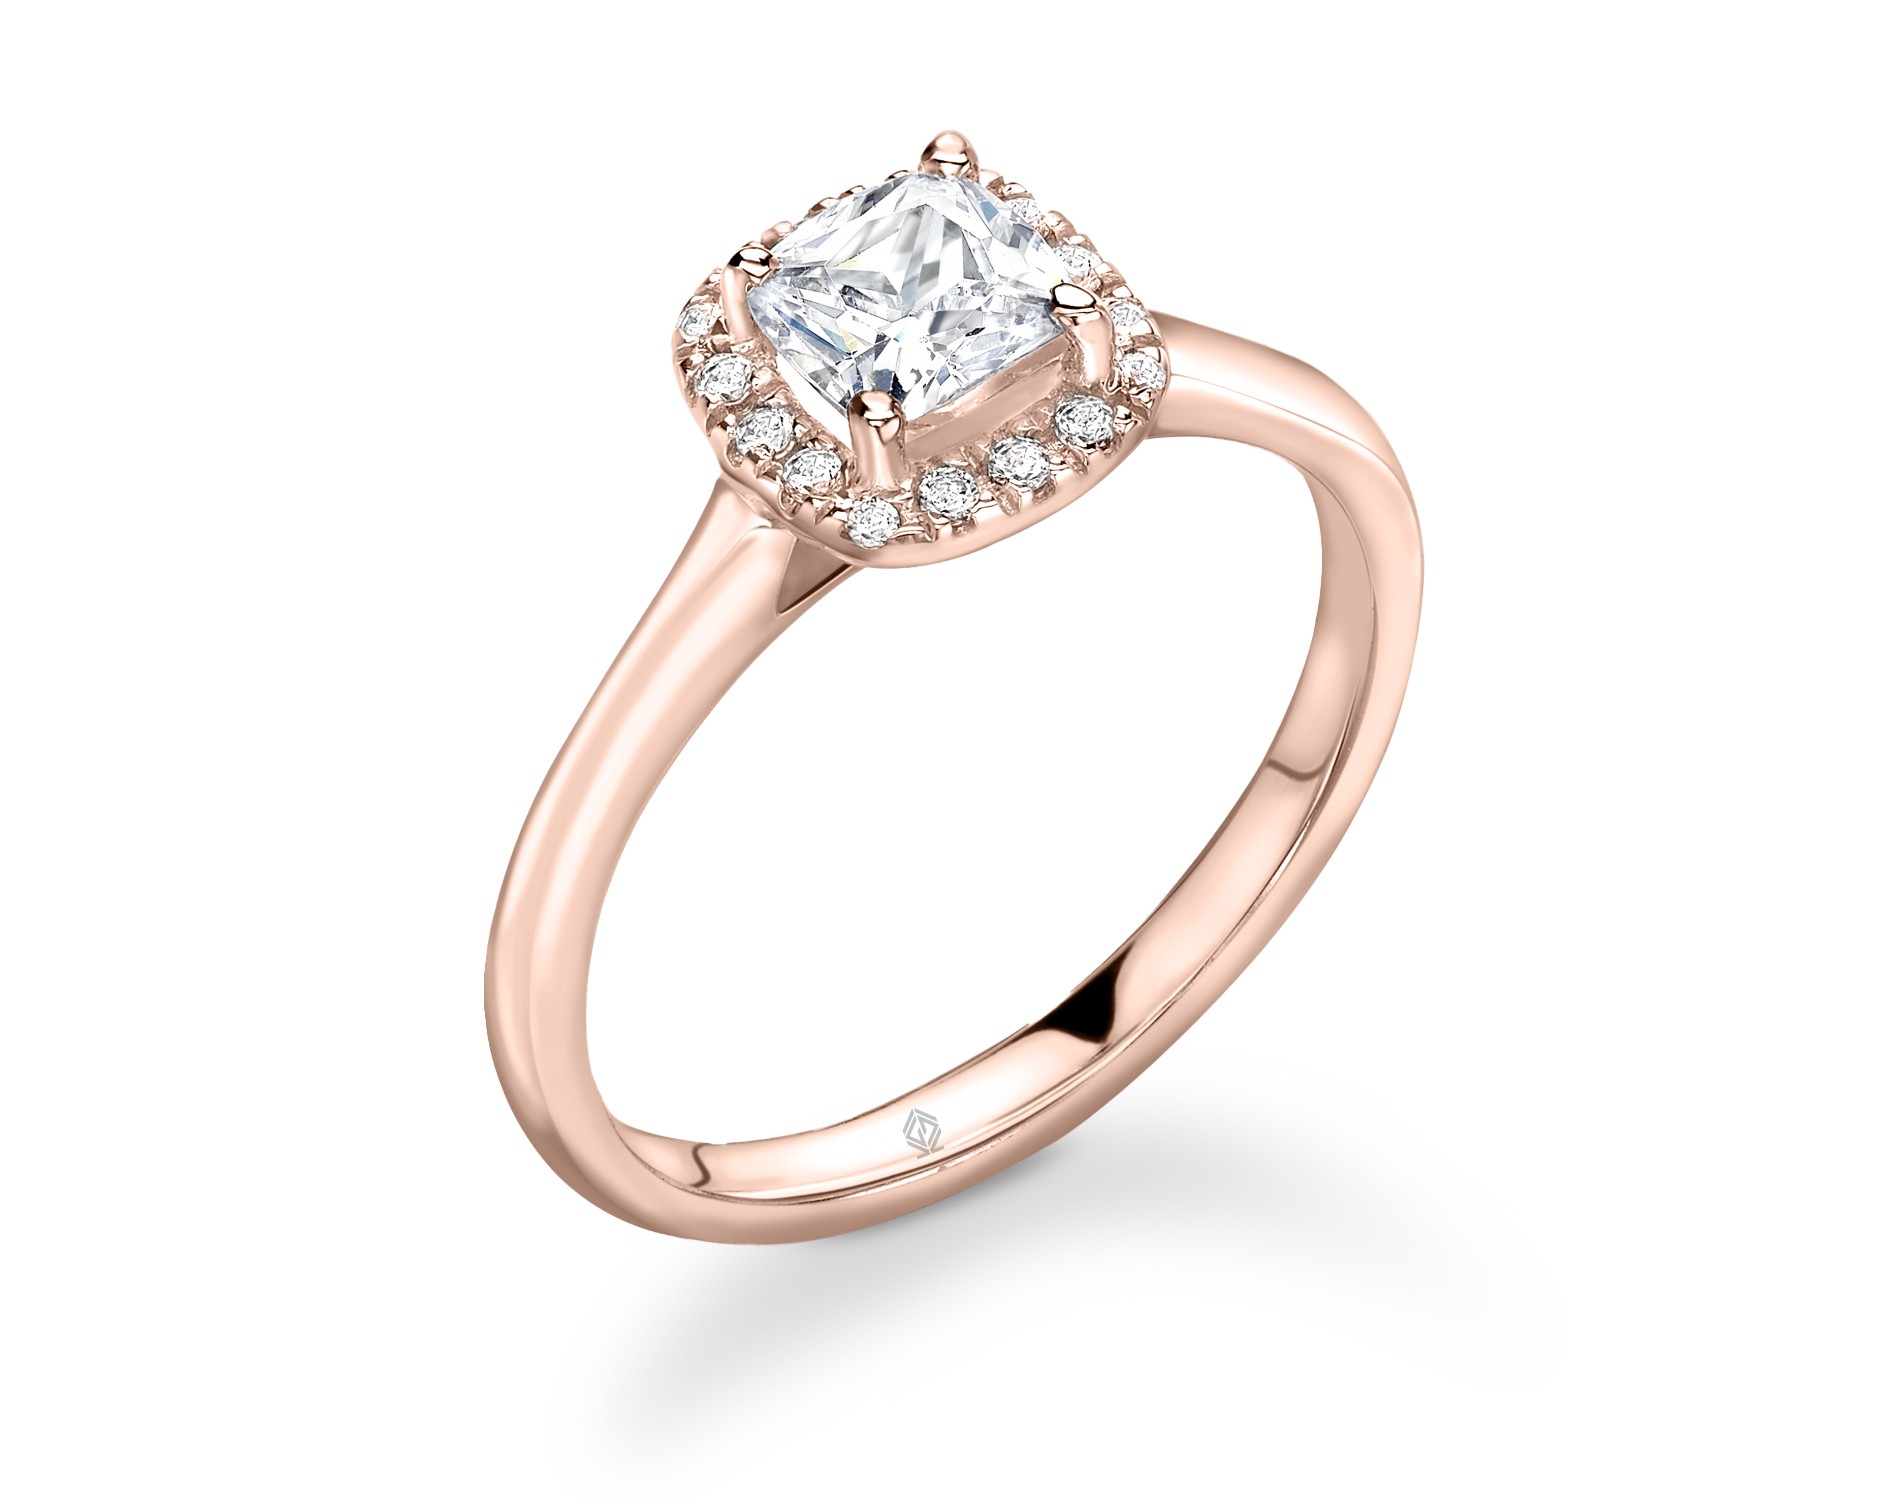 18K ROSE GOLD HALO SET CUSHION CUT DIAMOND ENGAGEMENT RING